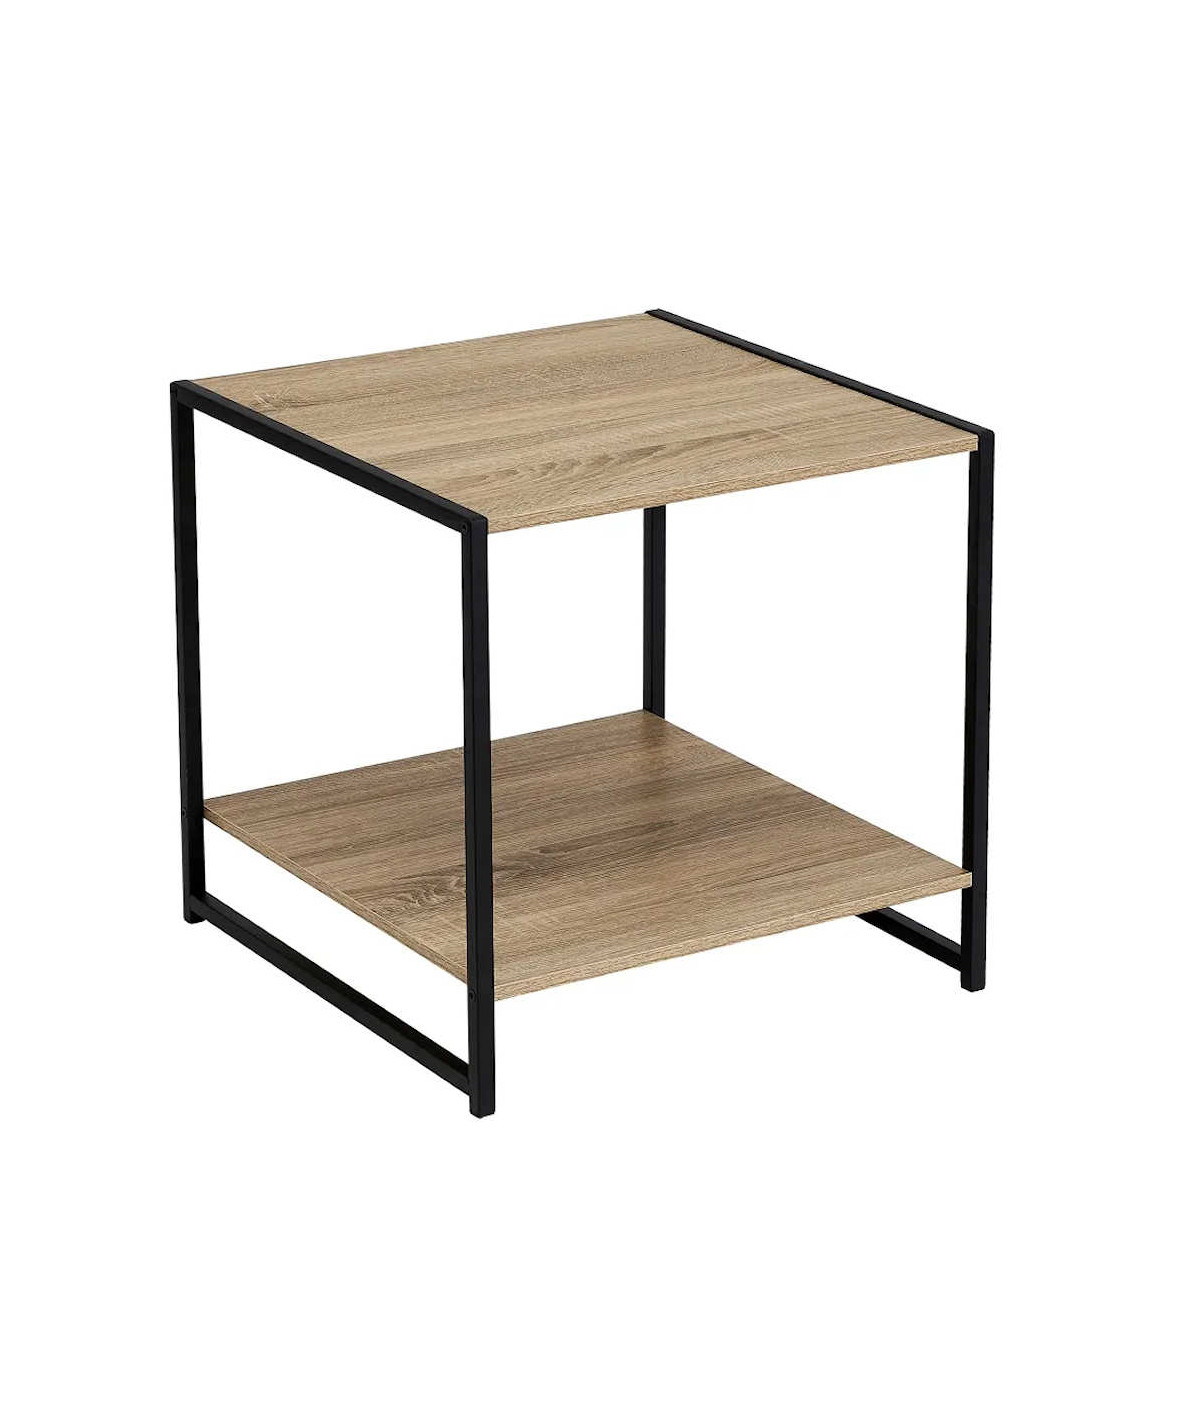 Table carré avec 2 étagères - Mini - Yesdeko